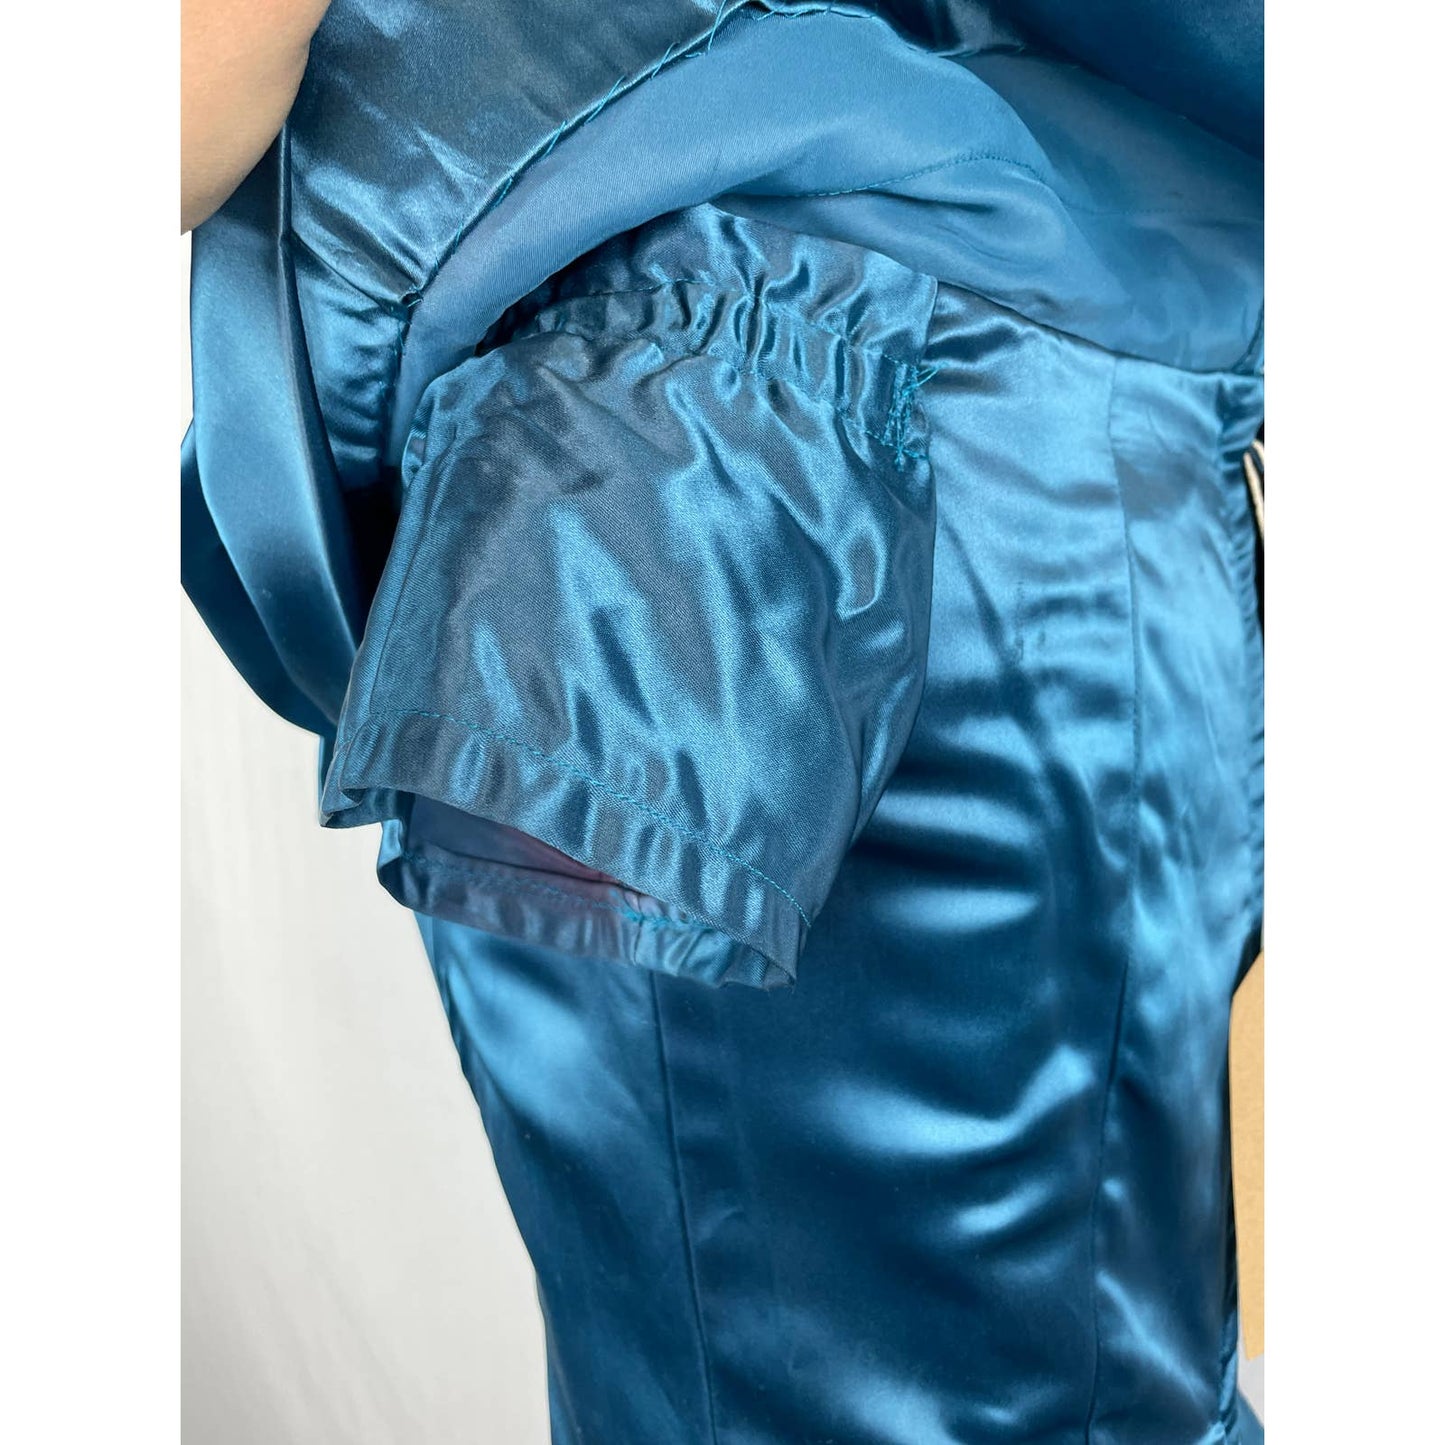 Vintage 1950s Party Dress Heavy Satin Blue Off the Shoulder Handmade Dress B112